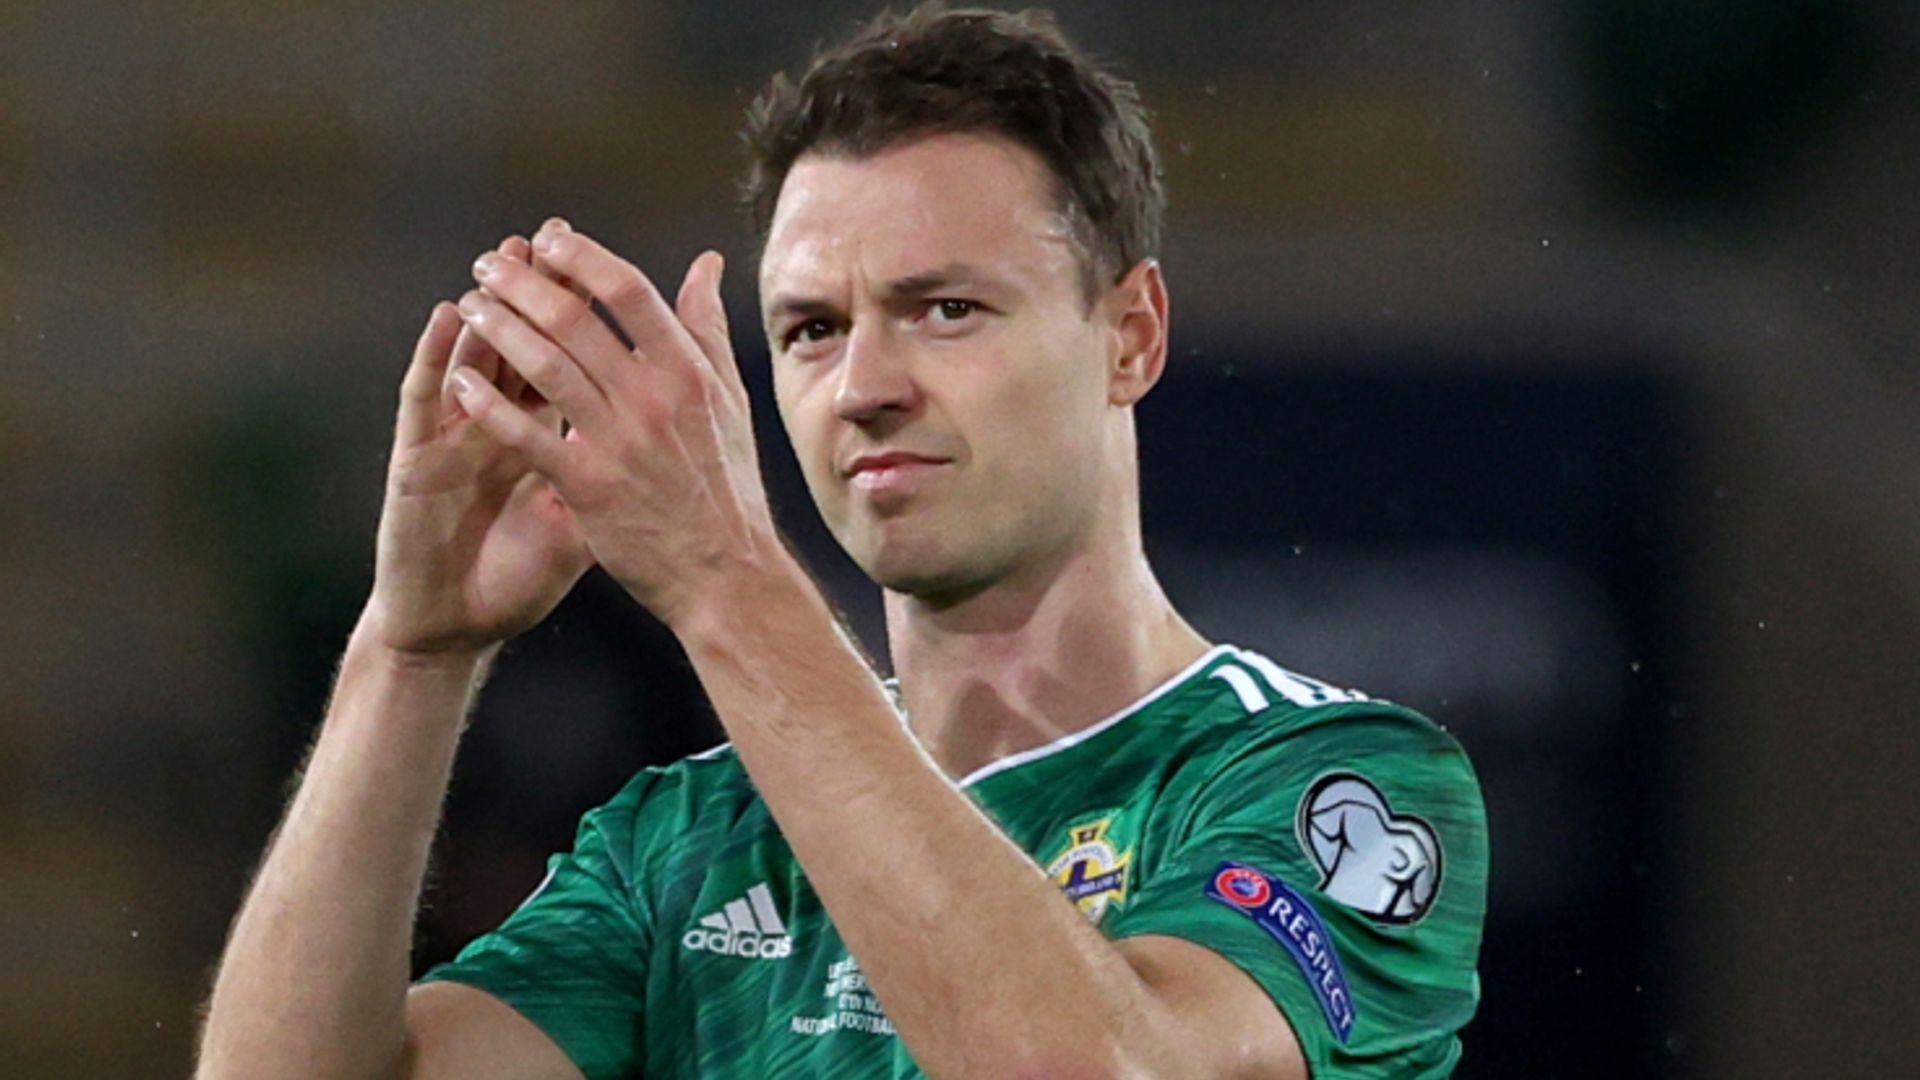 Evans adds to Northern Ireland's injury woes